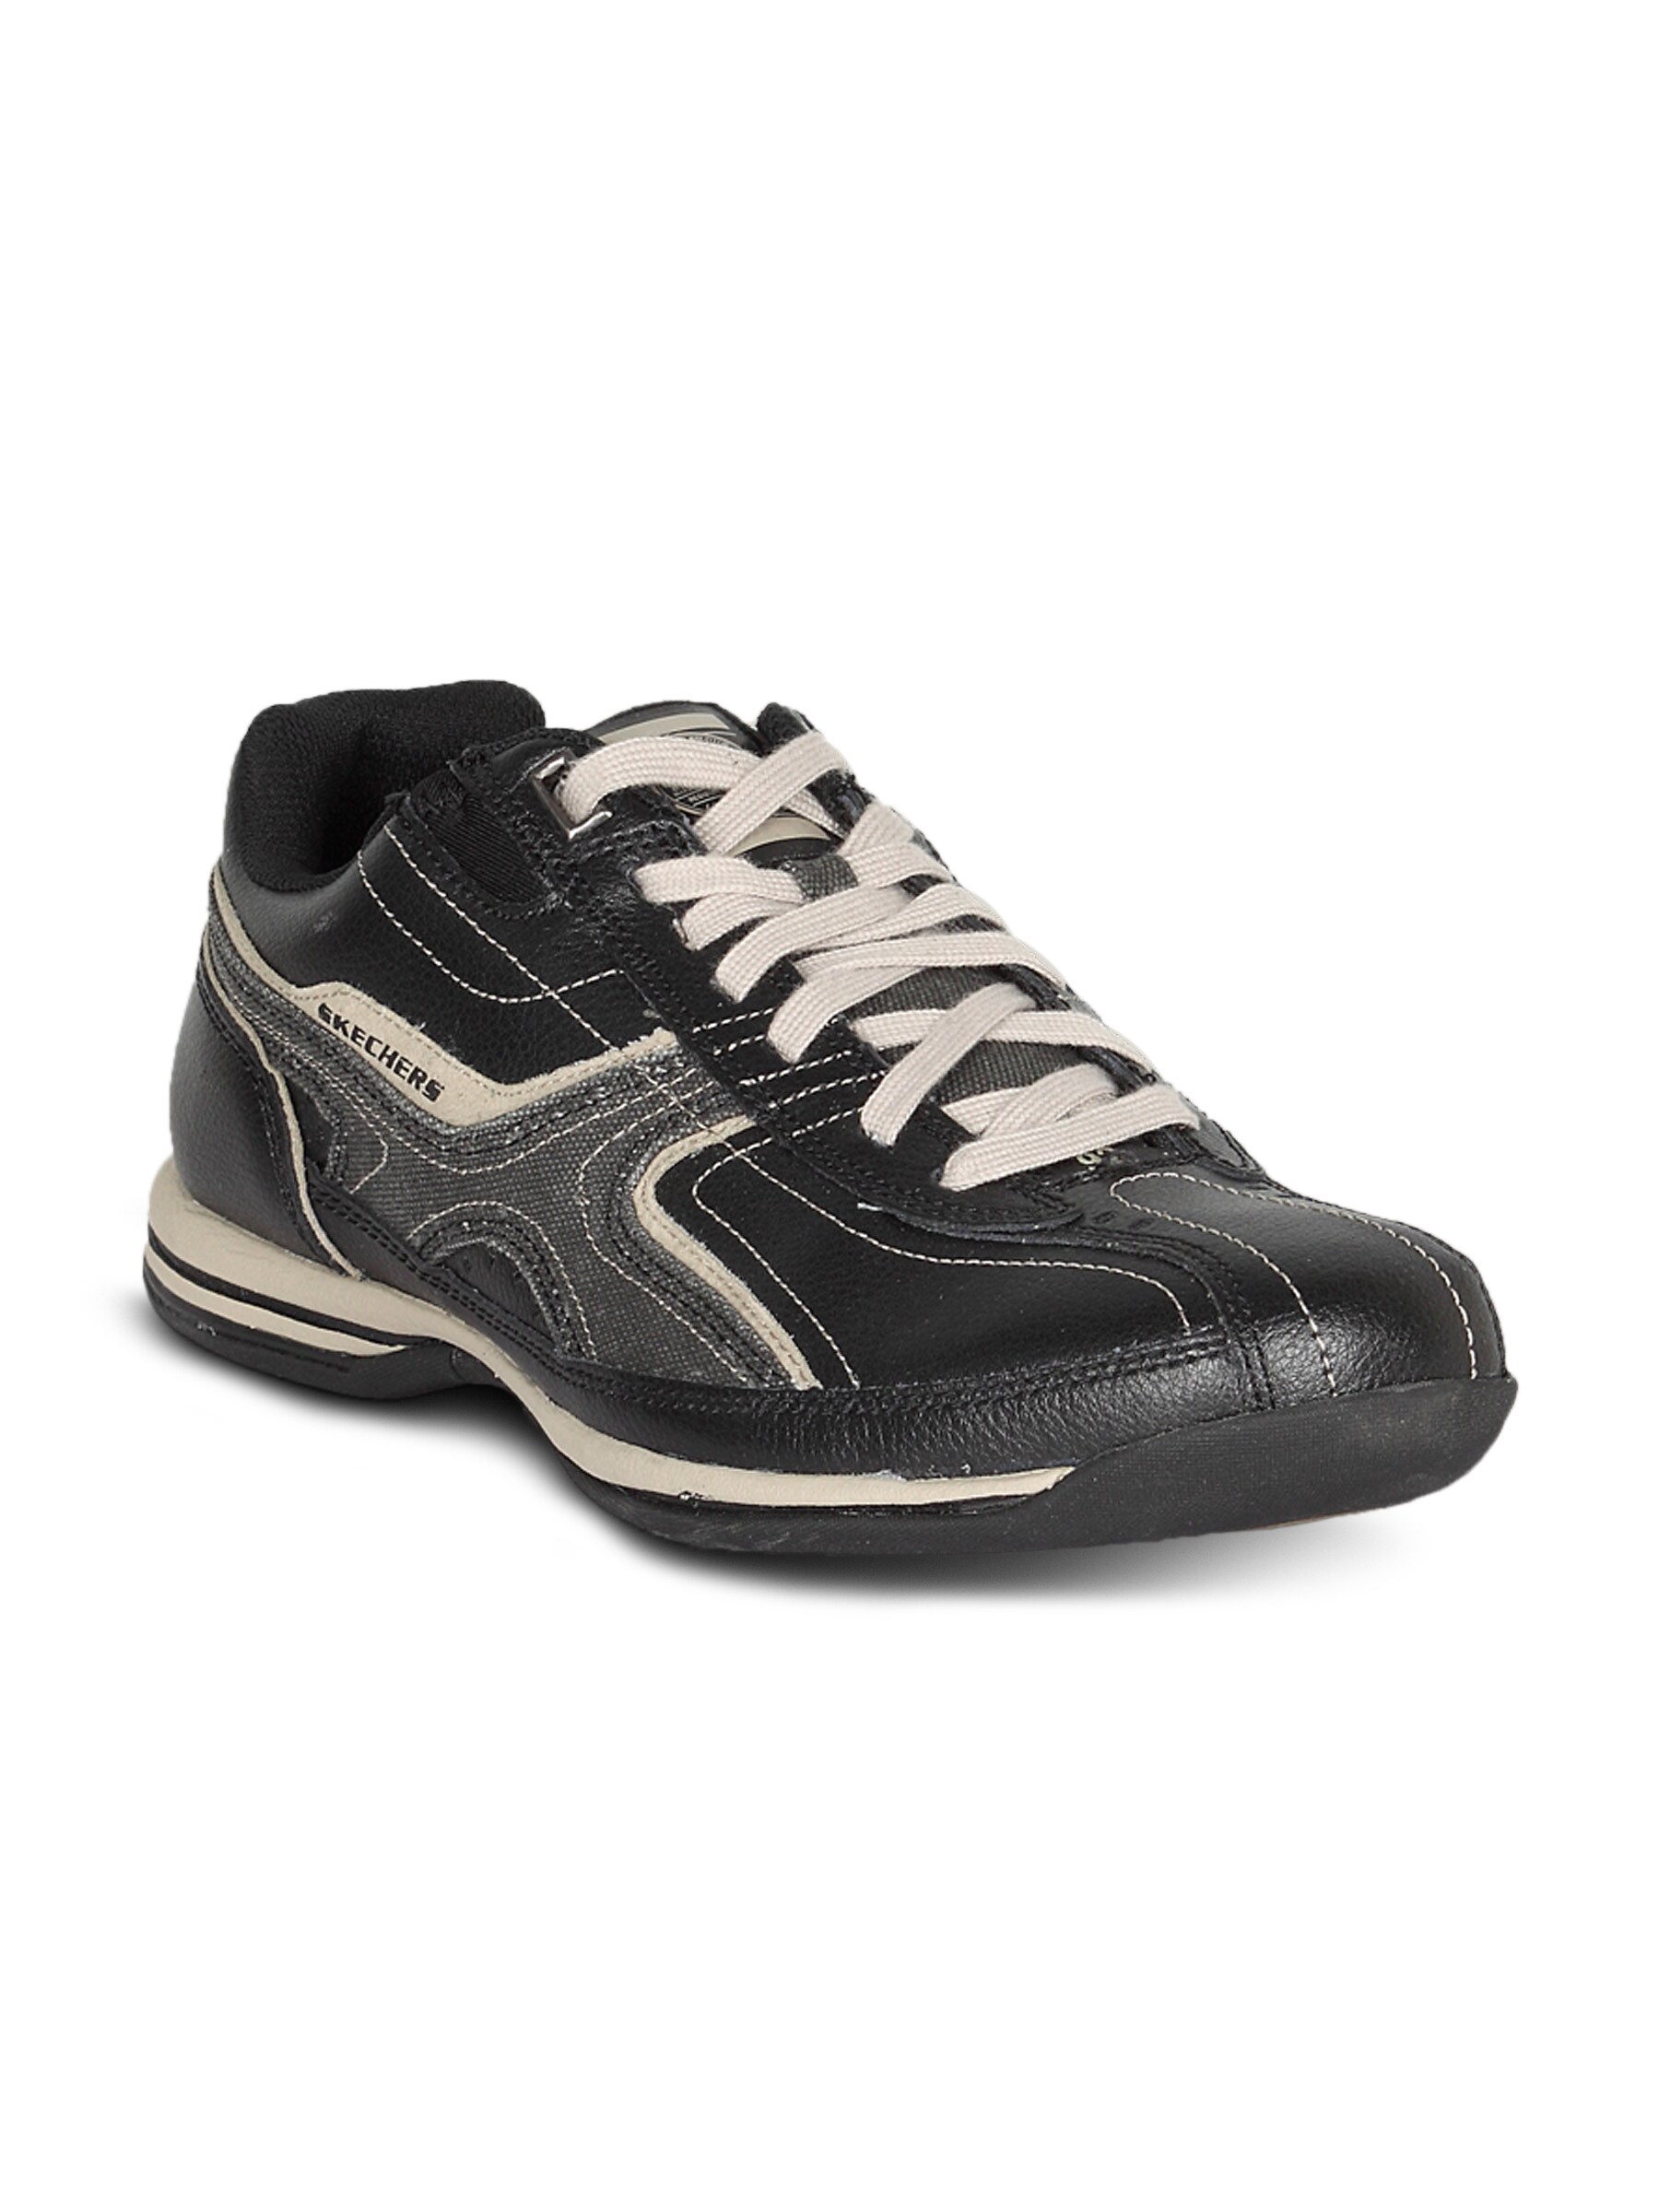 Skechers Men's Casual Black Taupe Shoe